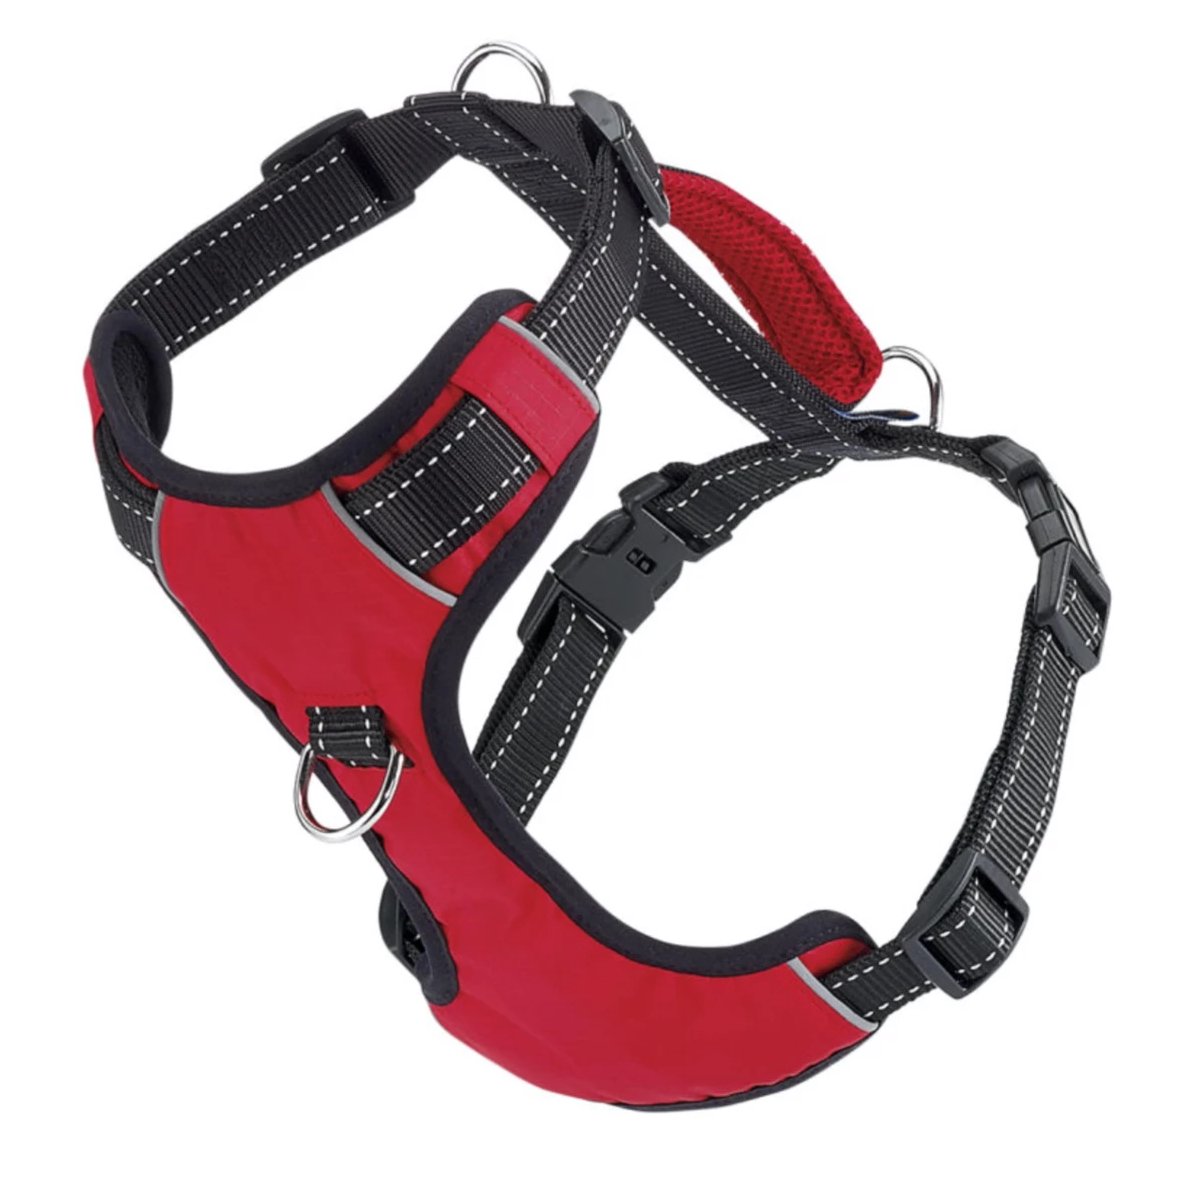 Chesapeake bay dog harness in red